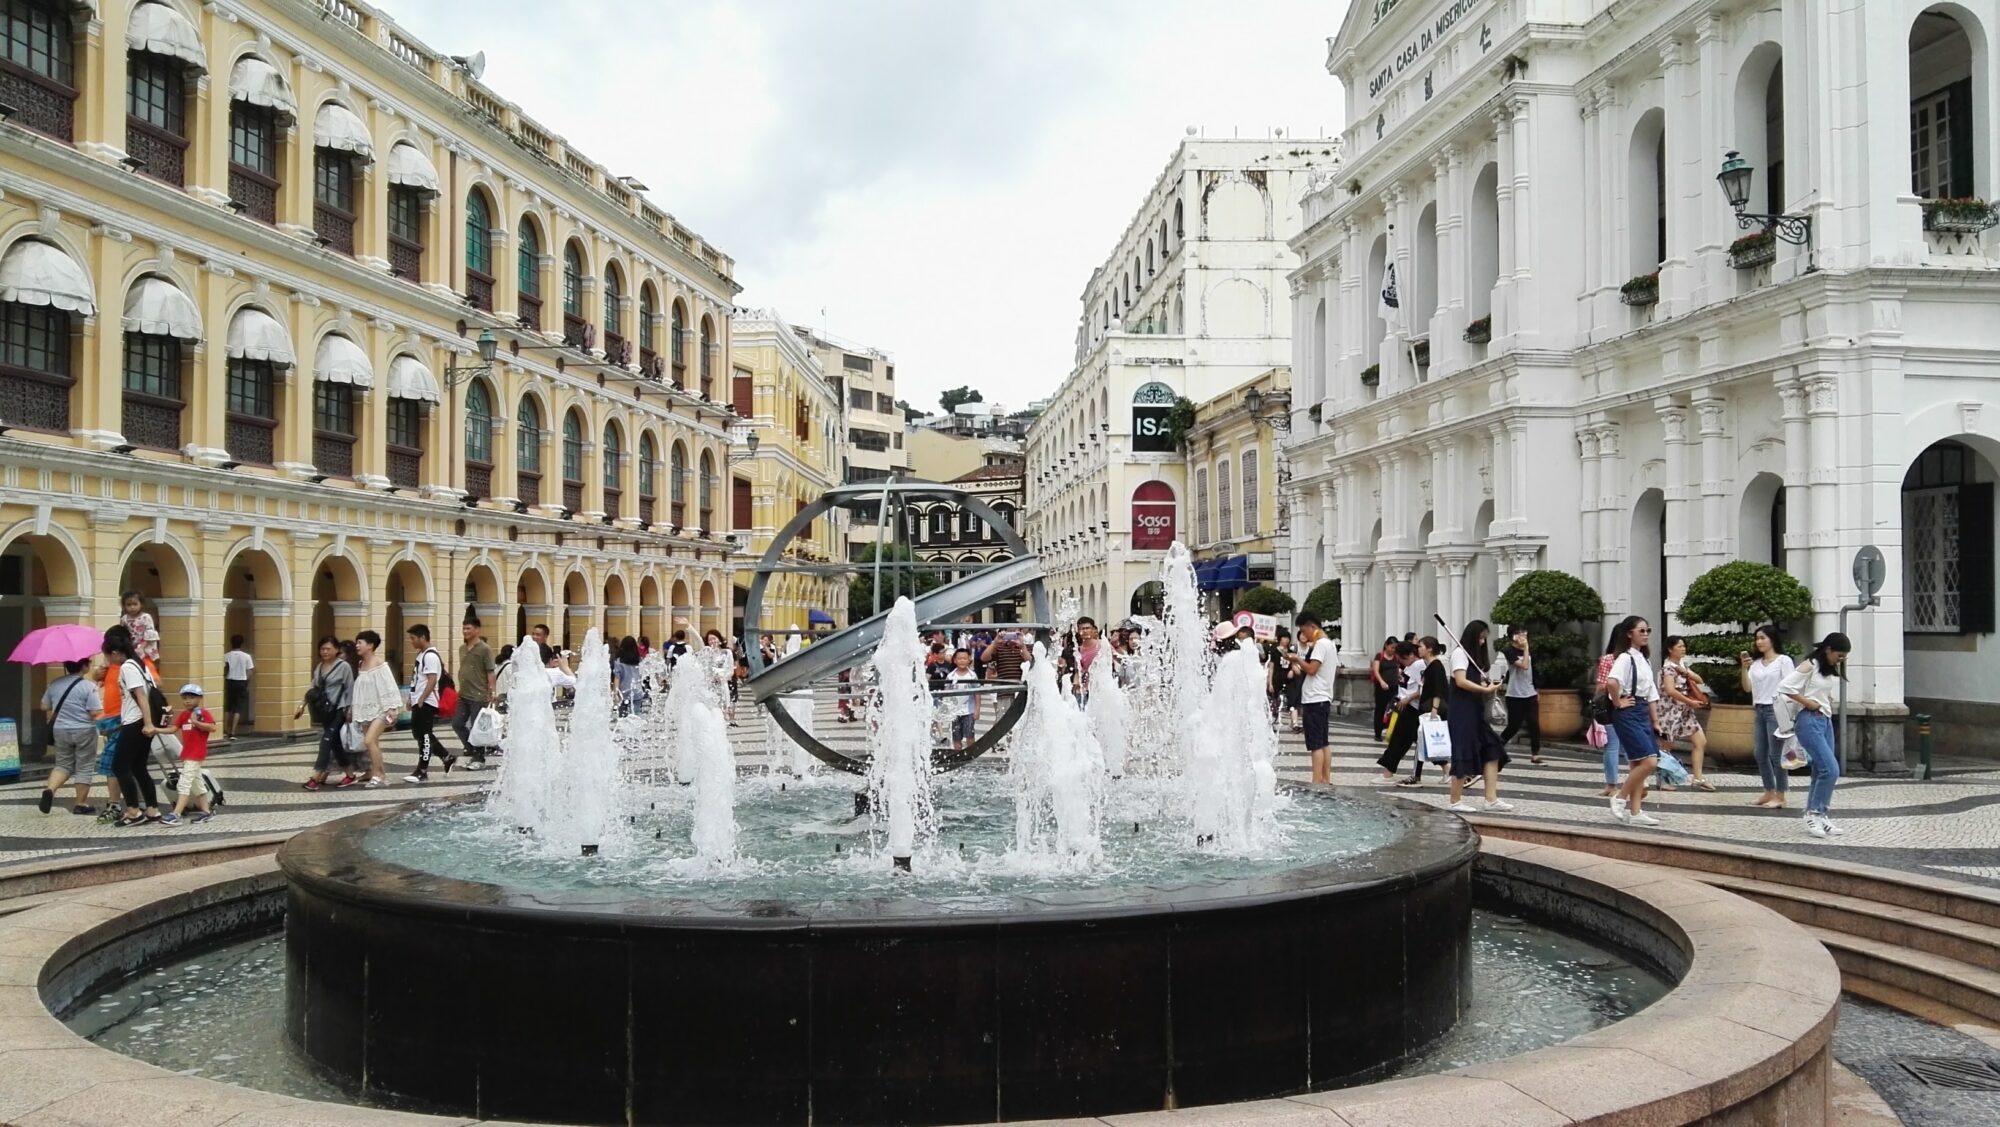 Macau Senado Square